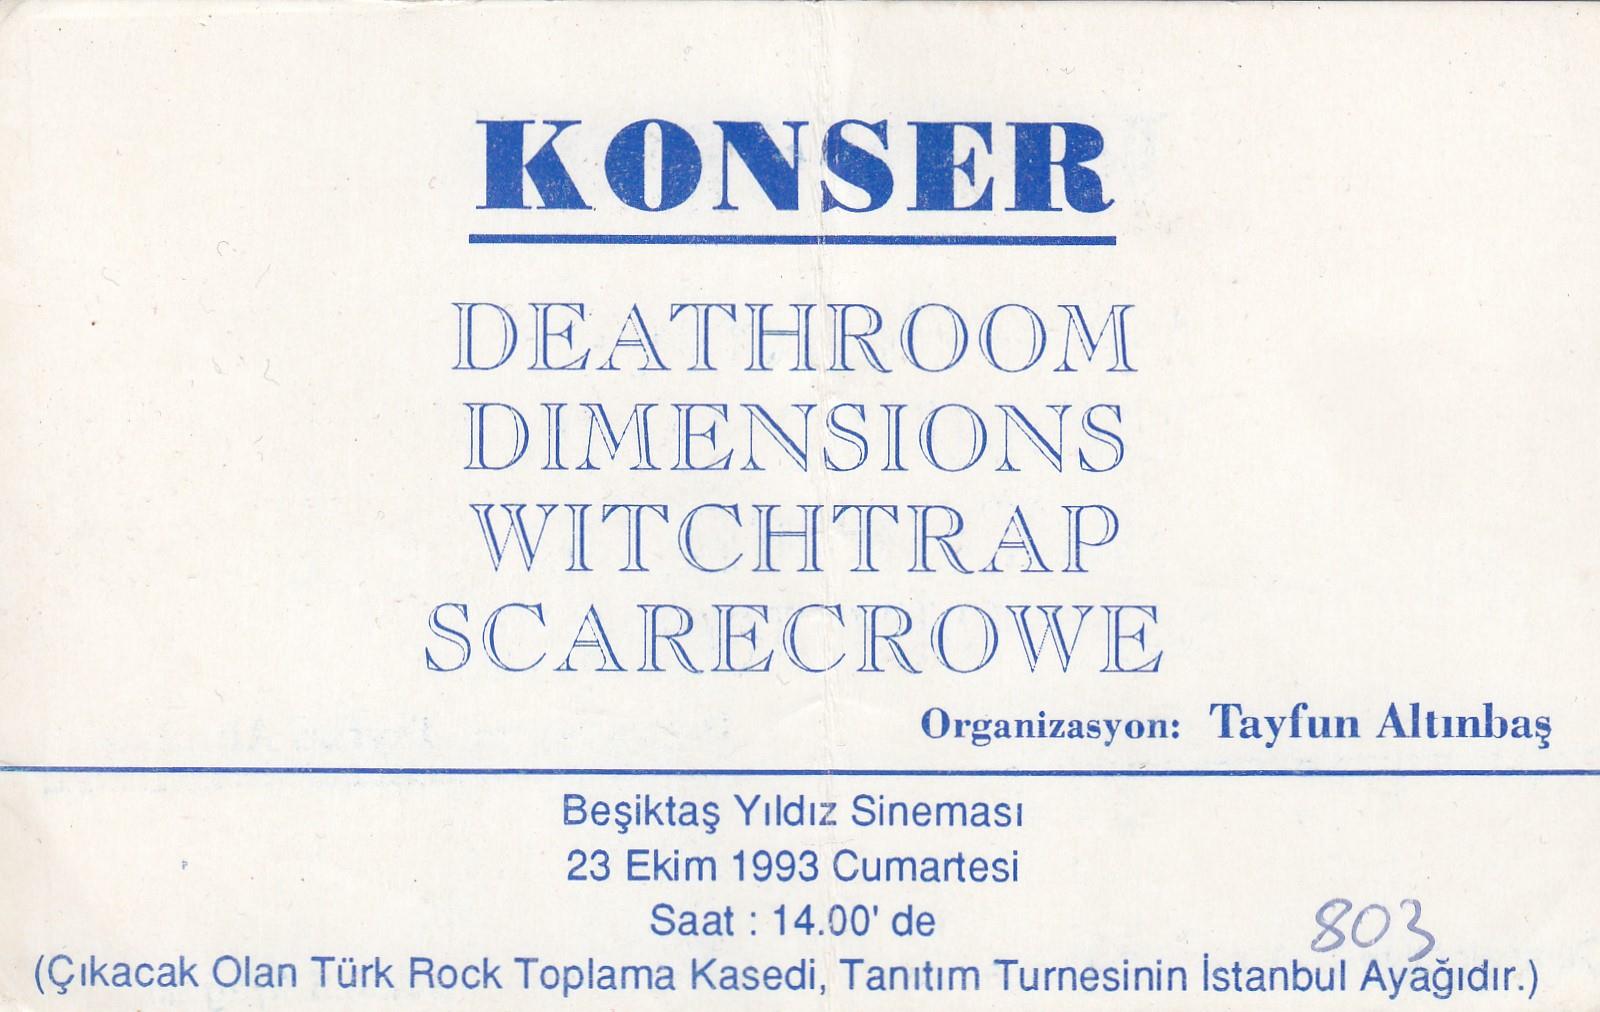 1993-10-23 Deathroom, Dimensions, Witchtrap, Scarecrowe (bilet)